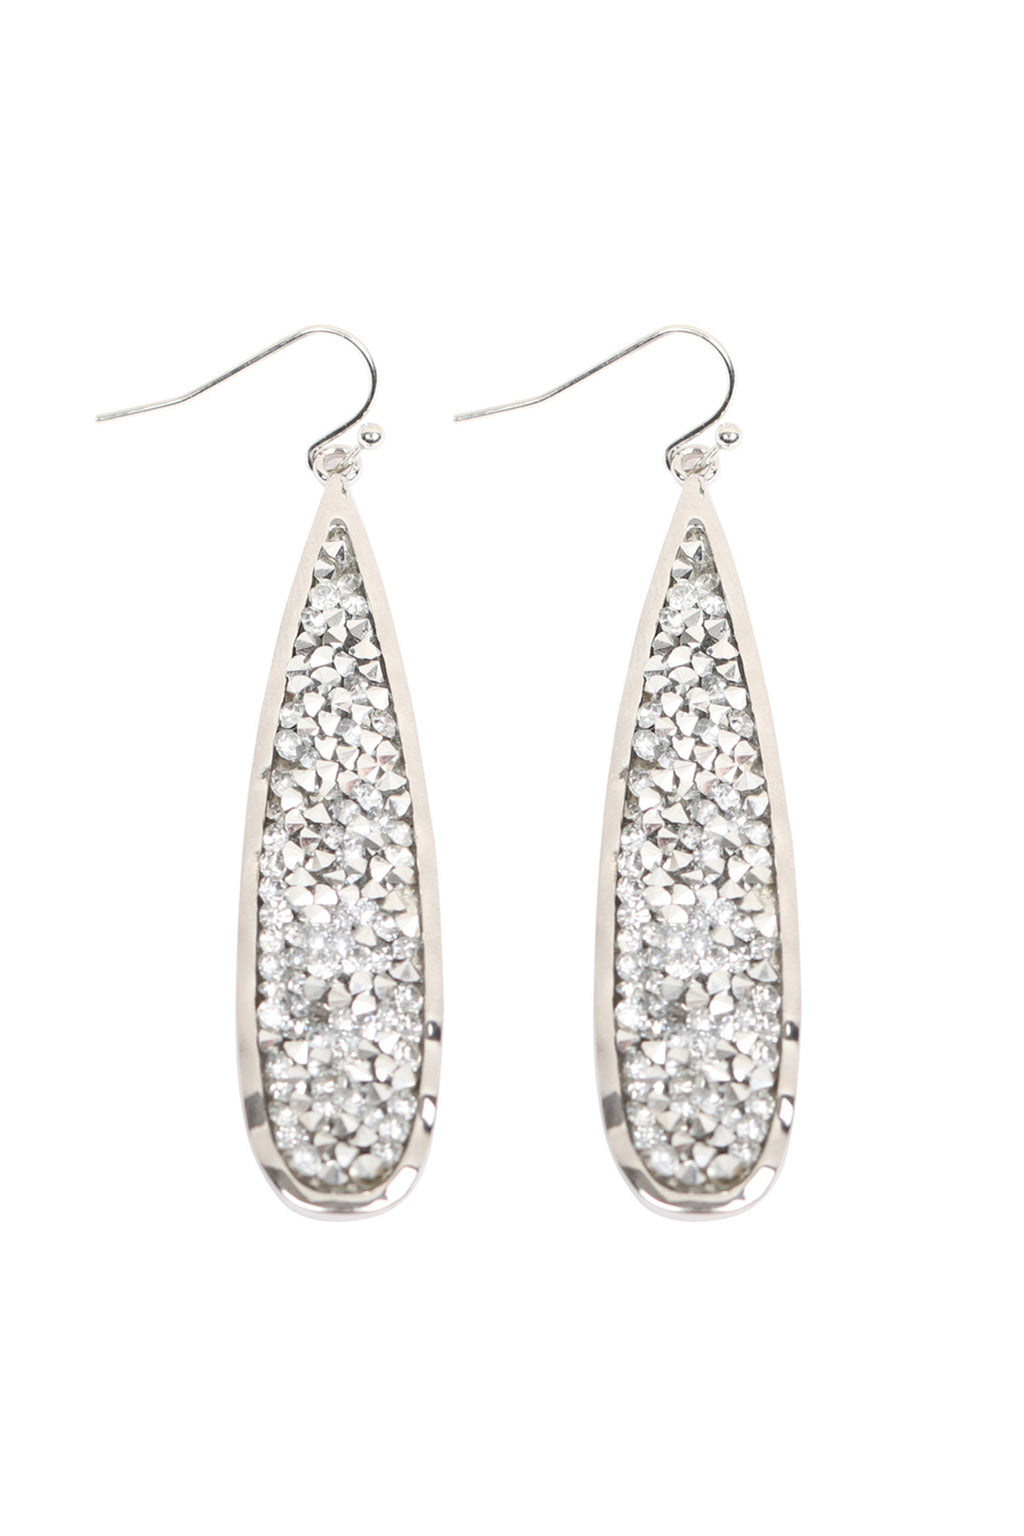 Silver  Long Pear Glitter Faceted Dangle Hook Earrings - Pack of 6